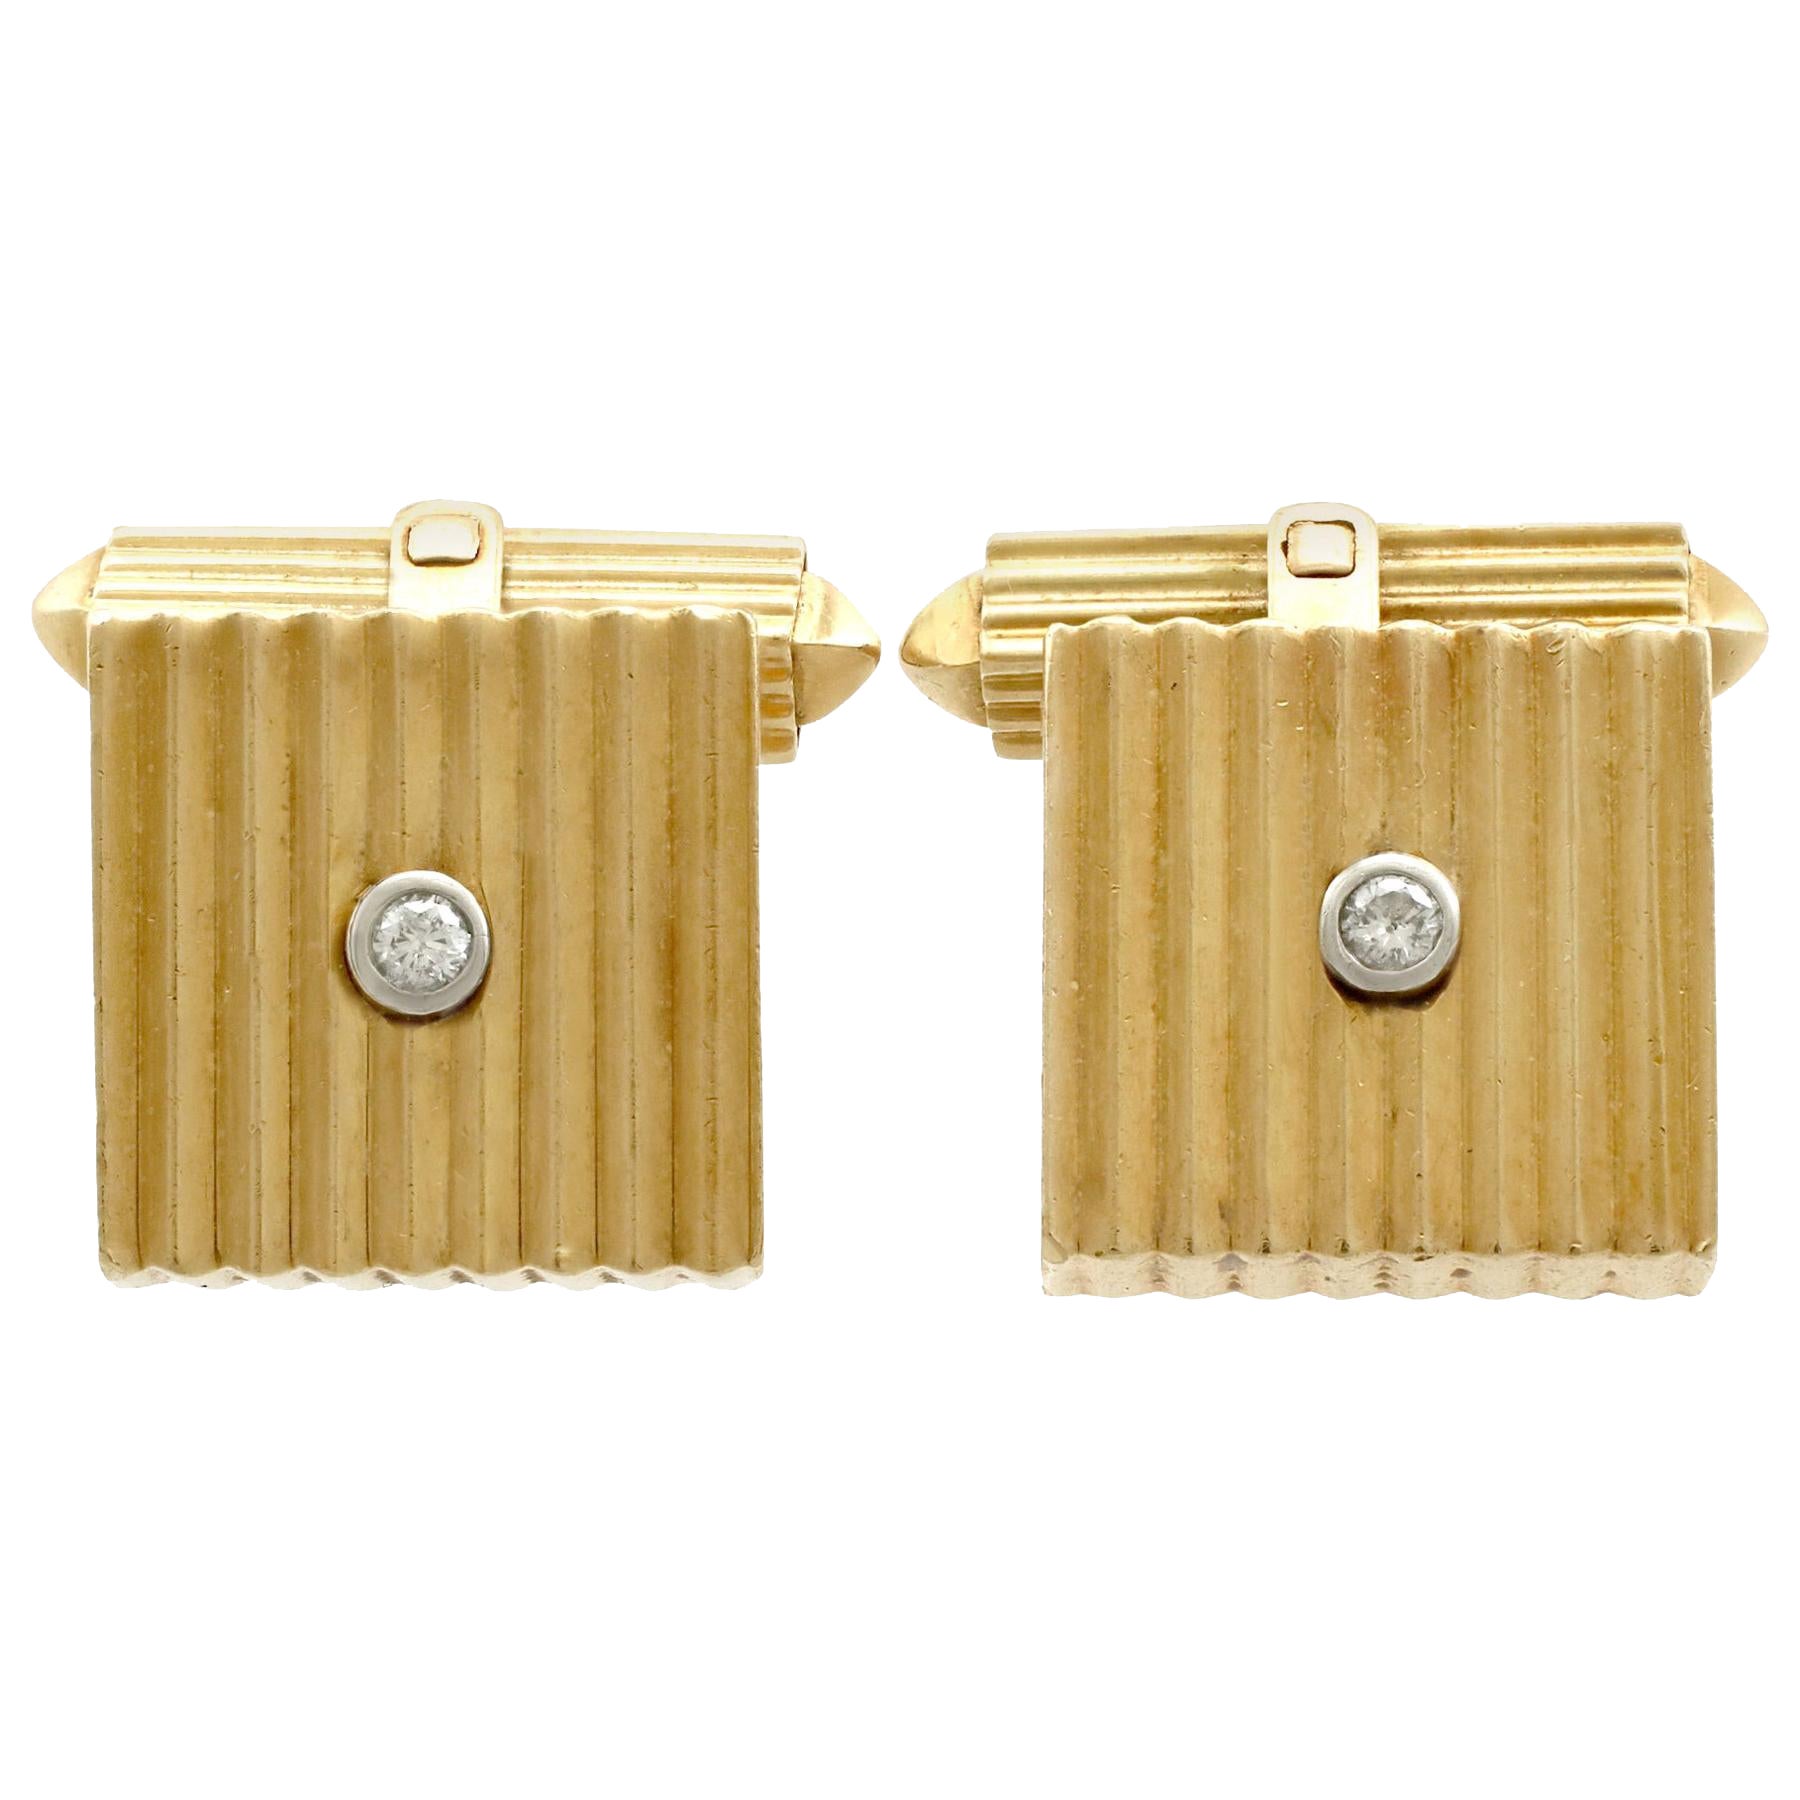 1960s German Art Deco Style Diamond Gold Cufflinks